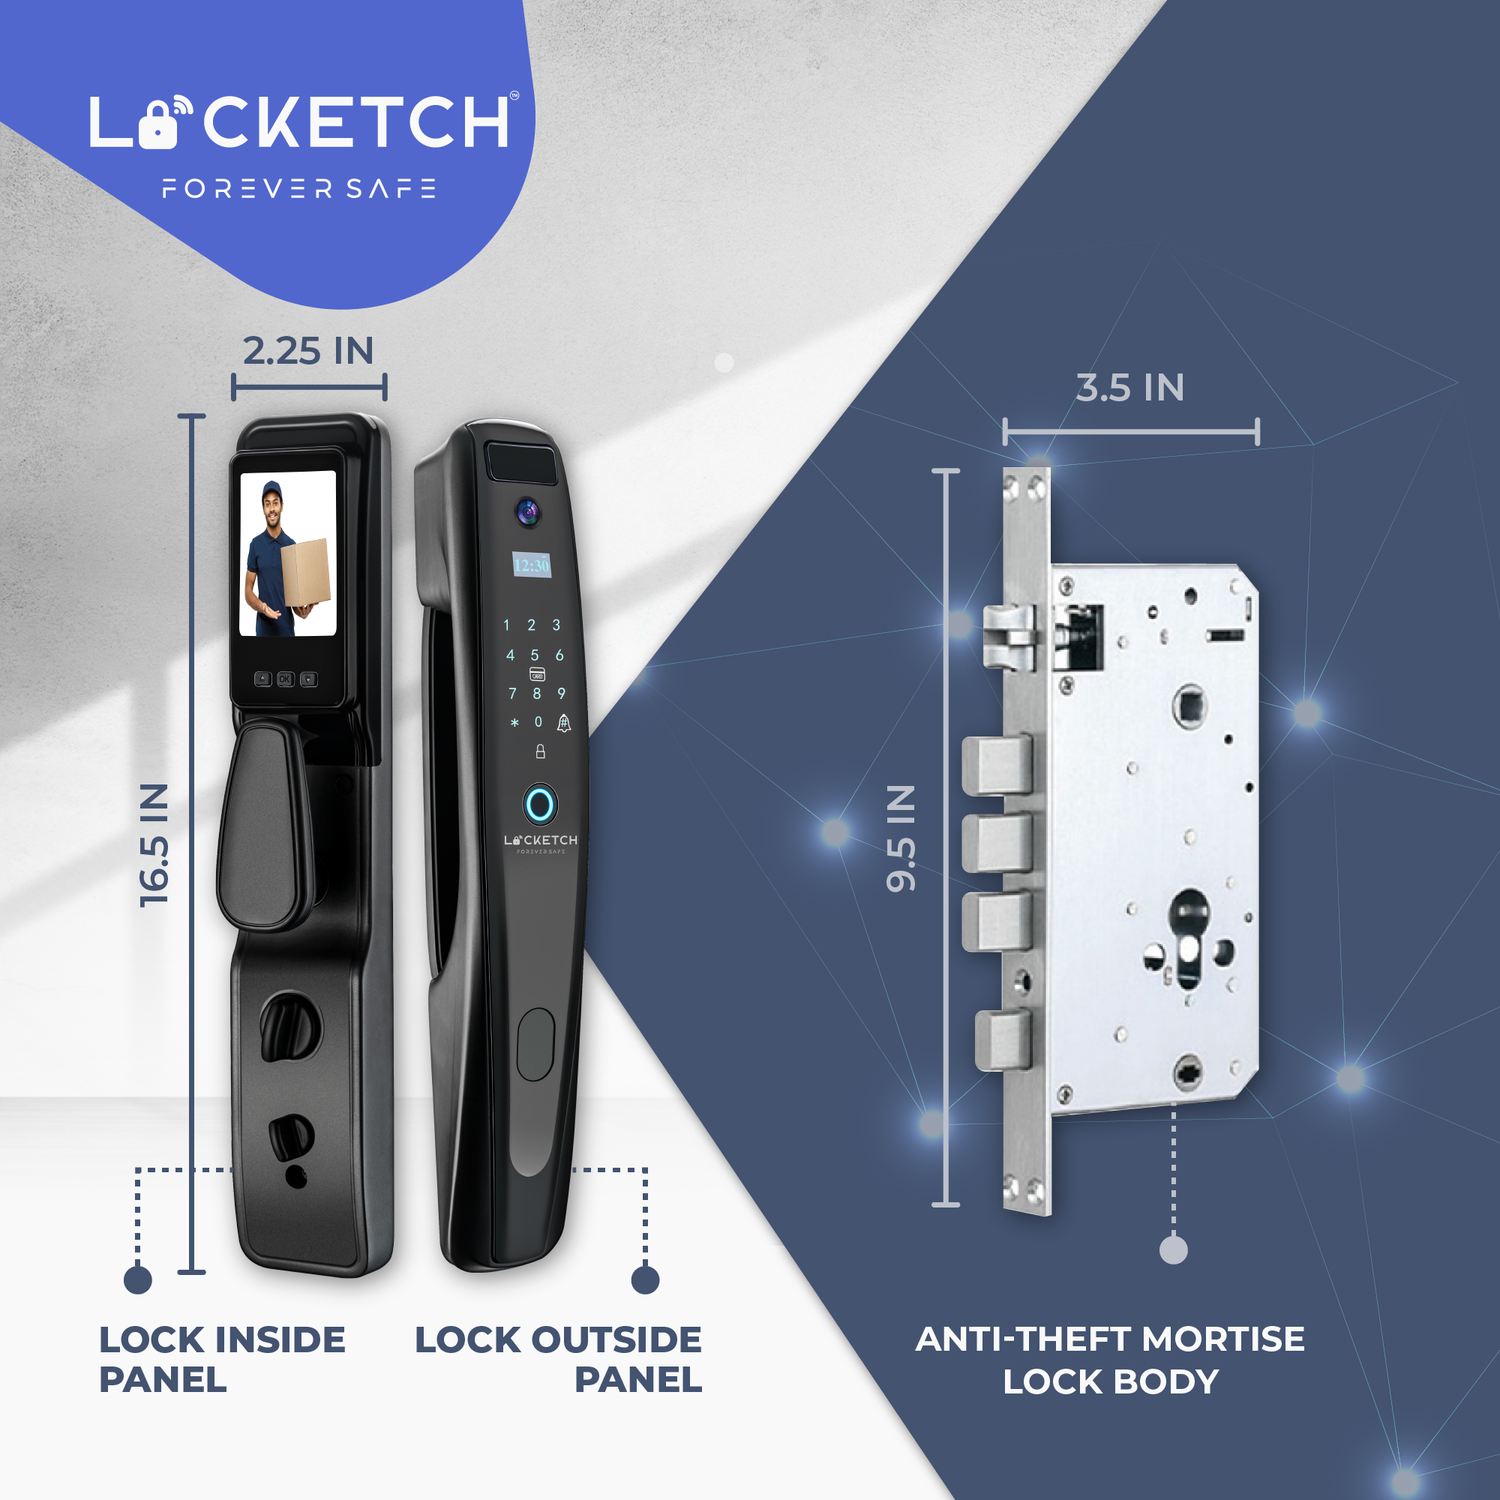 LAZYLOCKS: A Simple Smart Lock To Lock Any Door